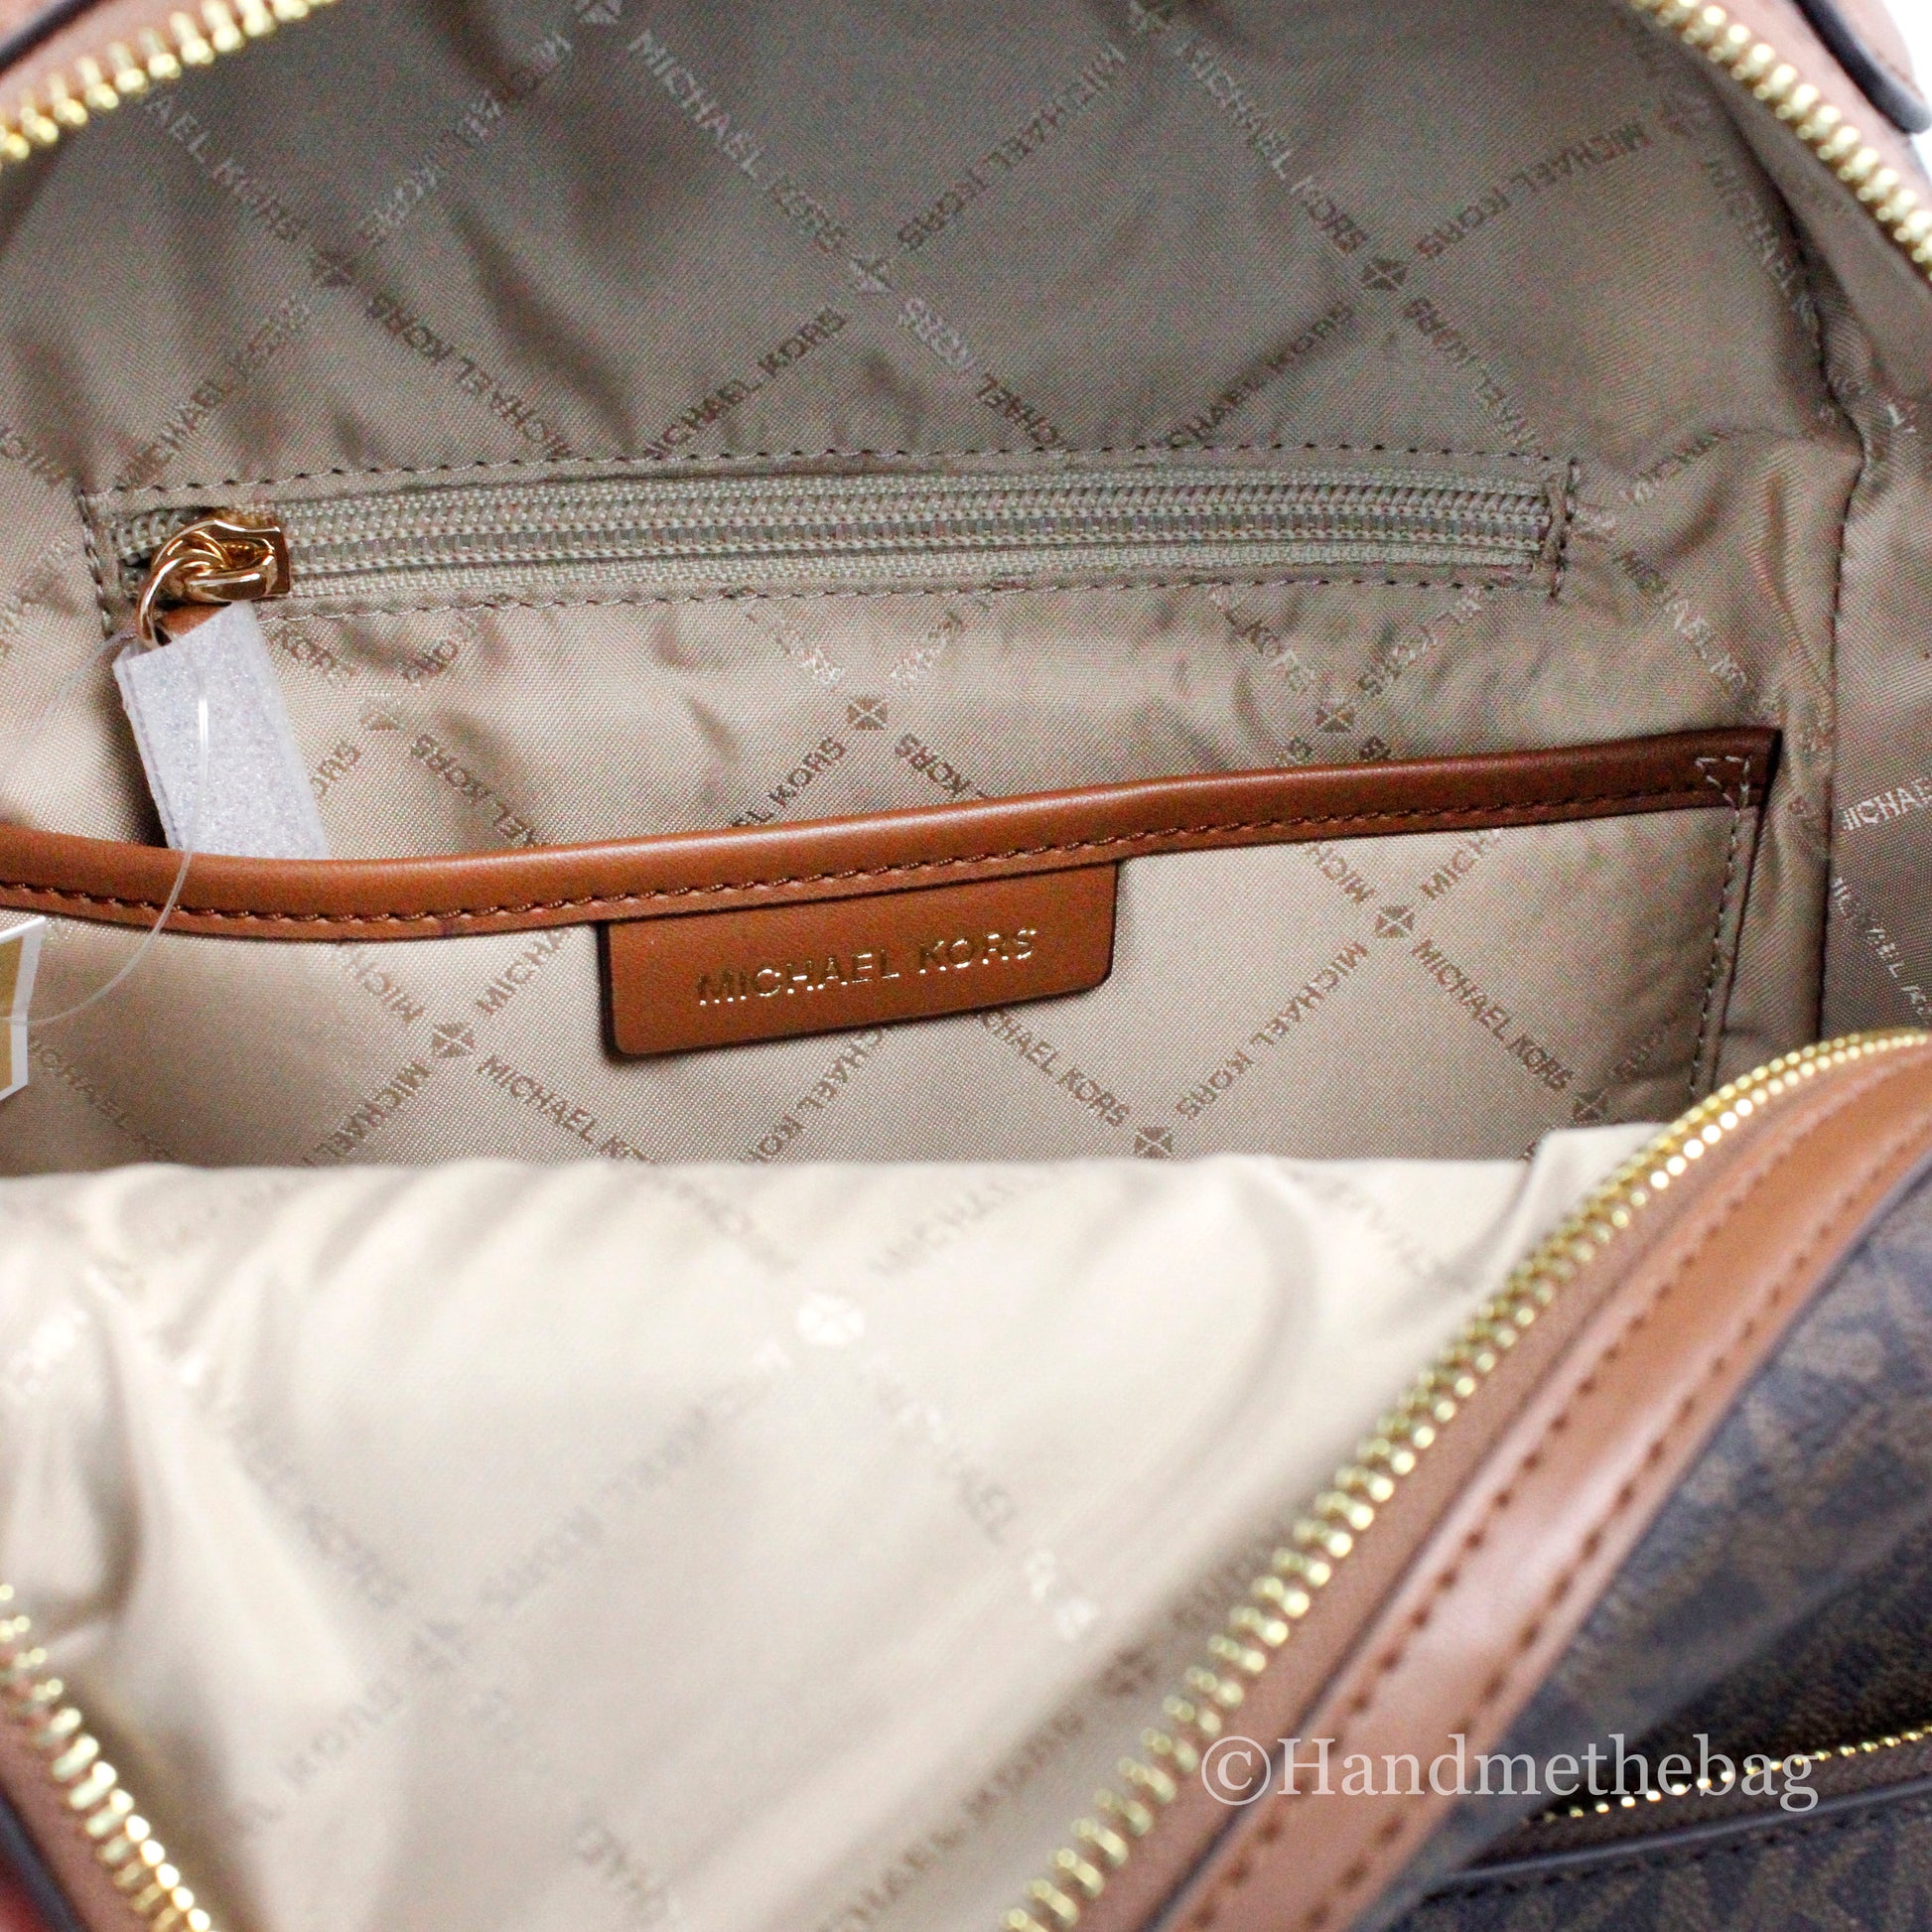 Michael Kors Sheila Medium Brown PVC Front Pocket Backpack